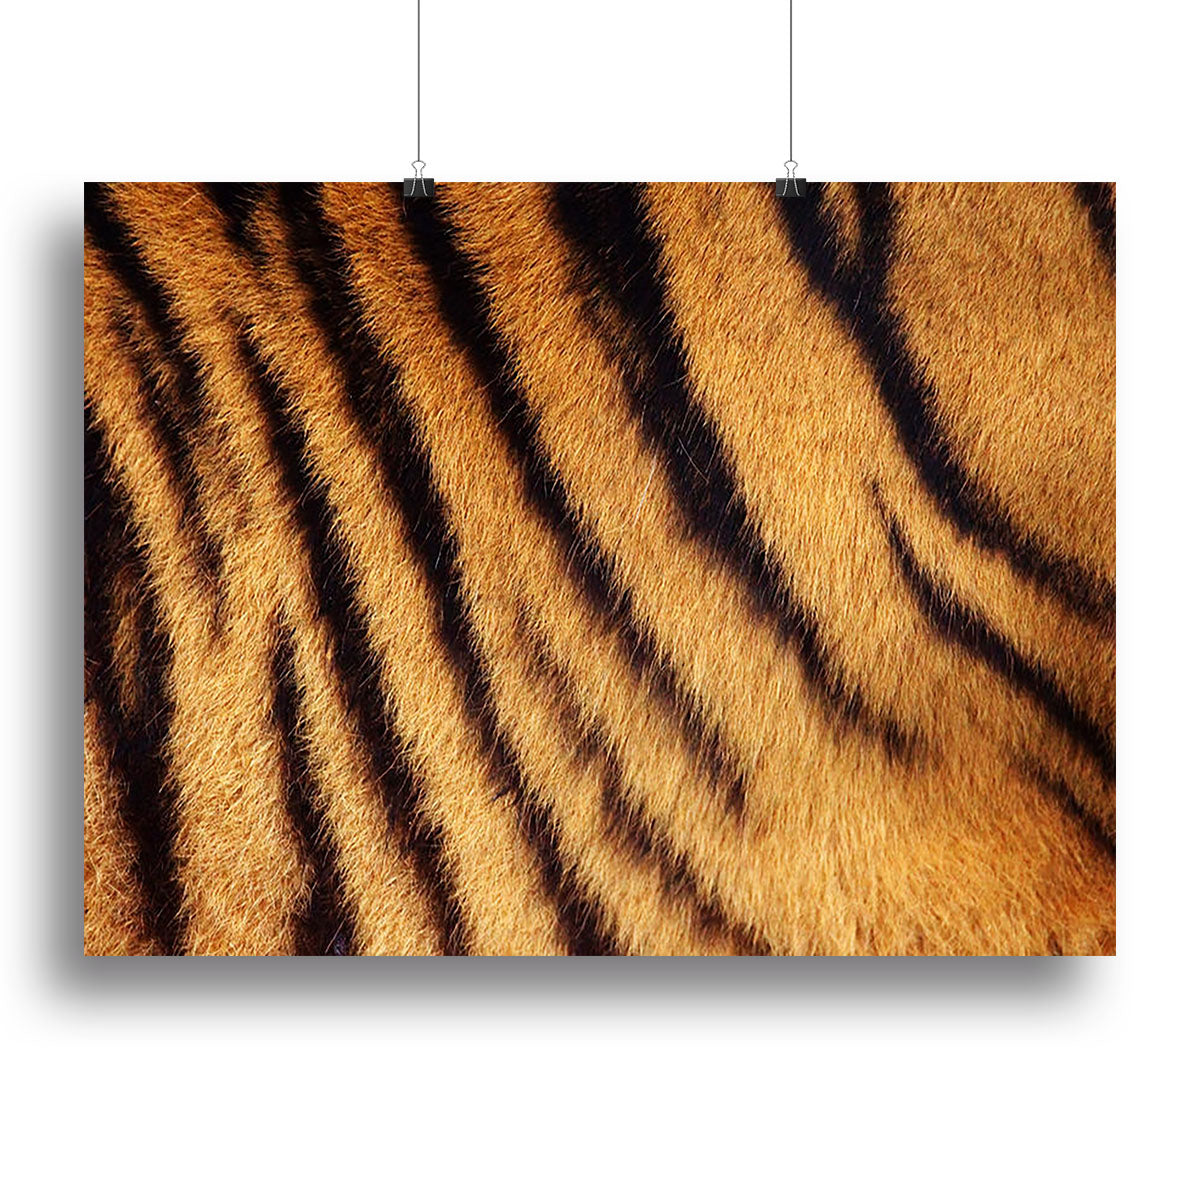 Siberian or Amur tiger stripped fur Canvas Print or Poster - Canvas Art Rocks - 2